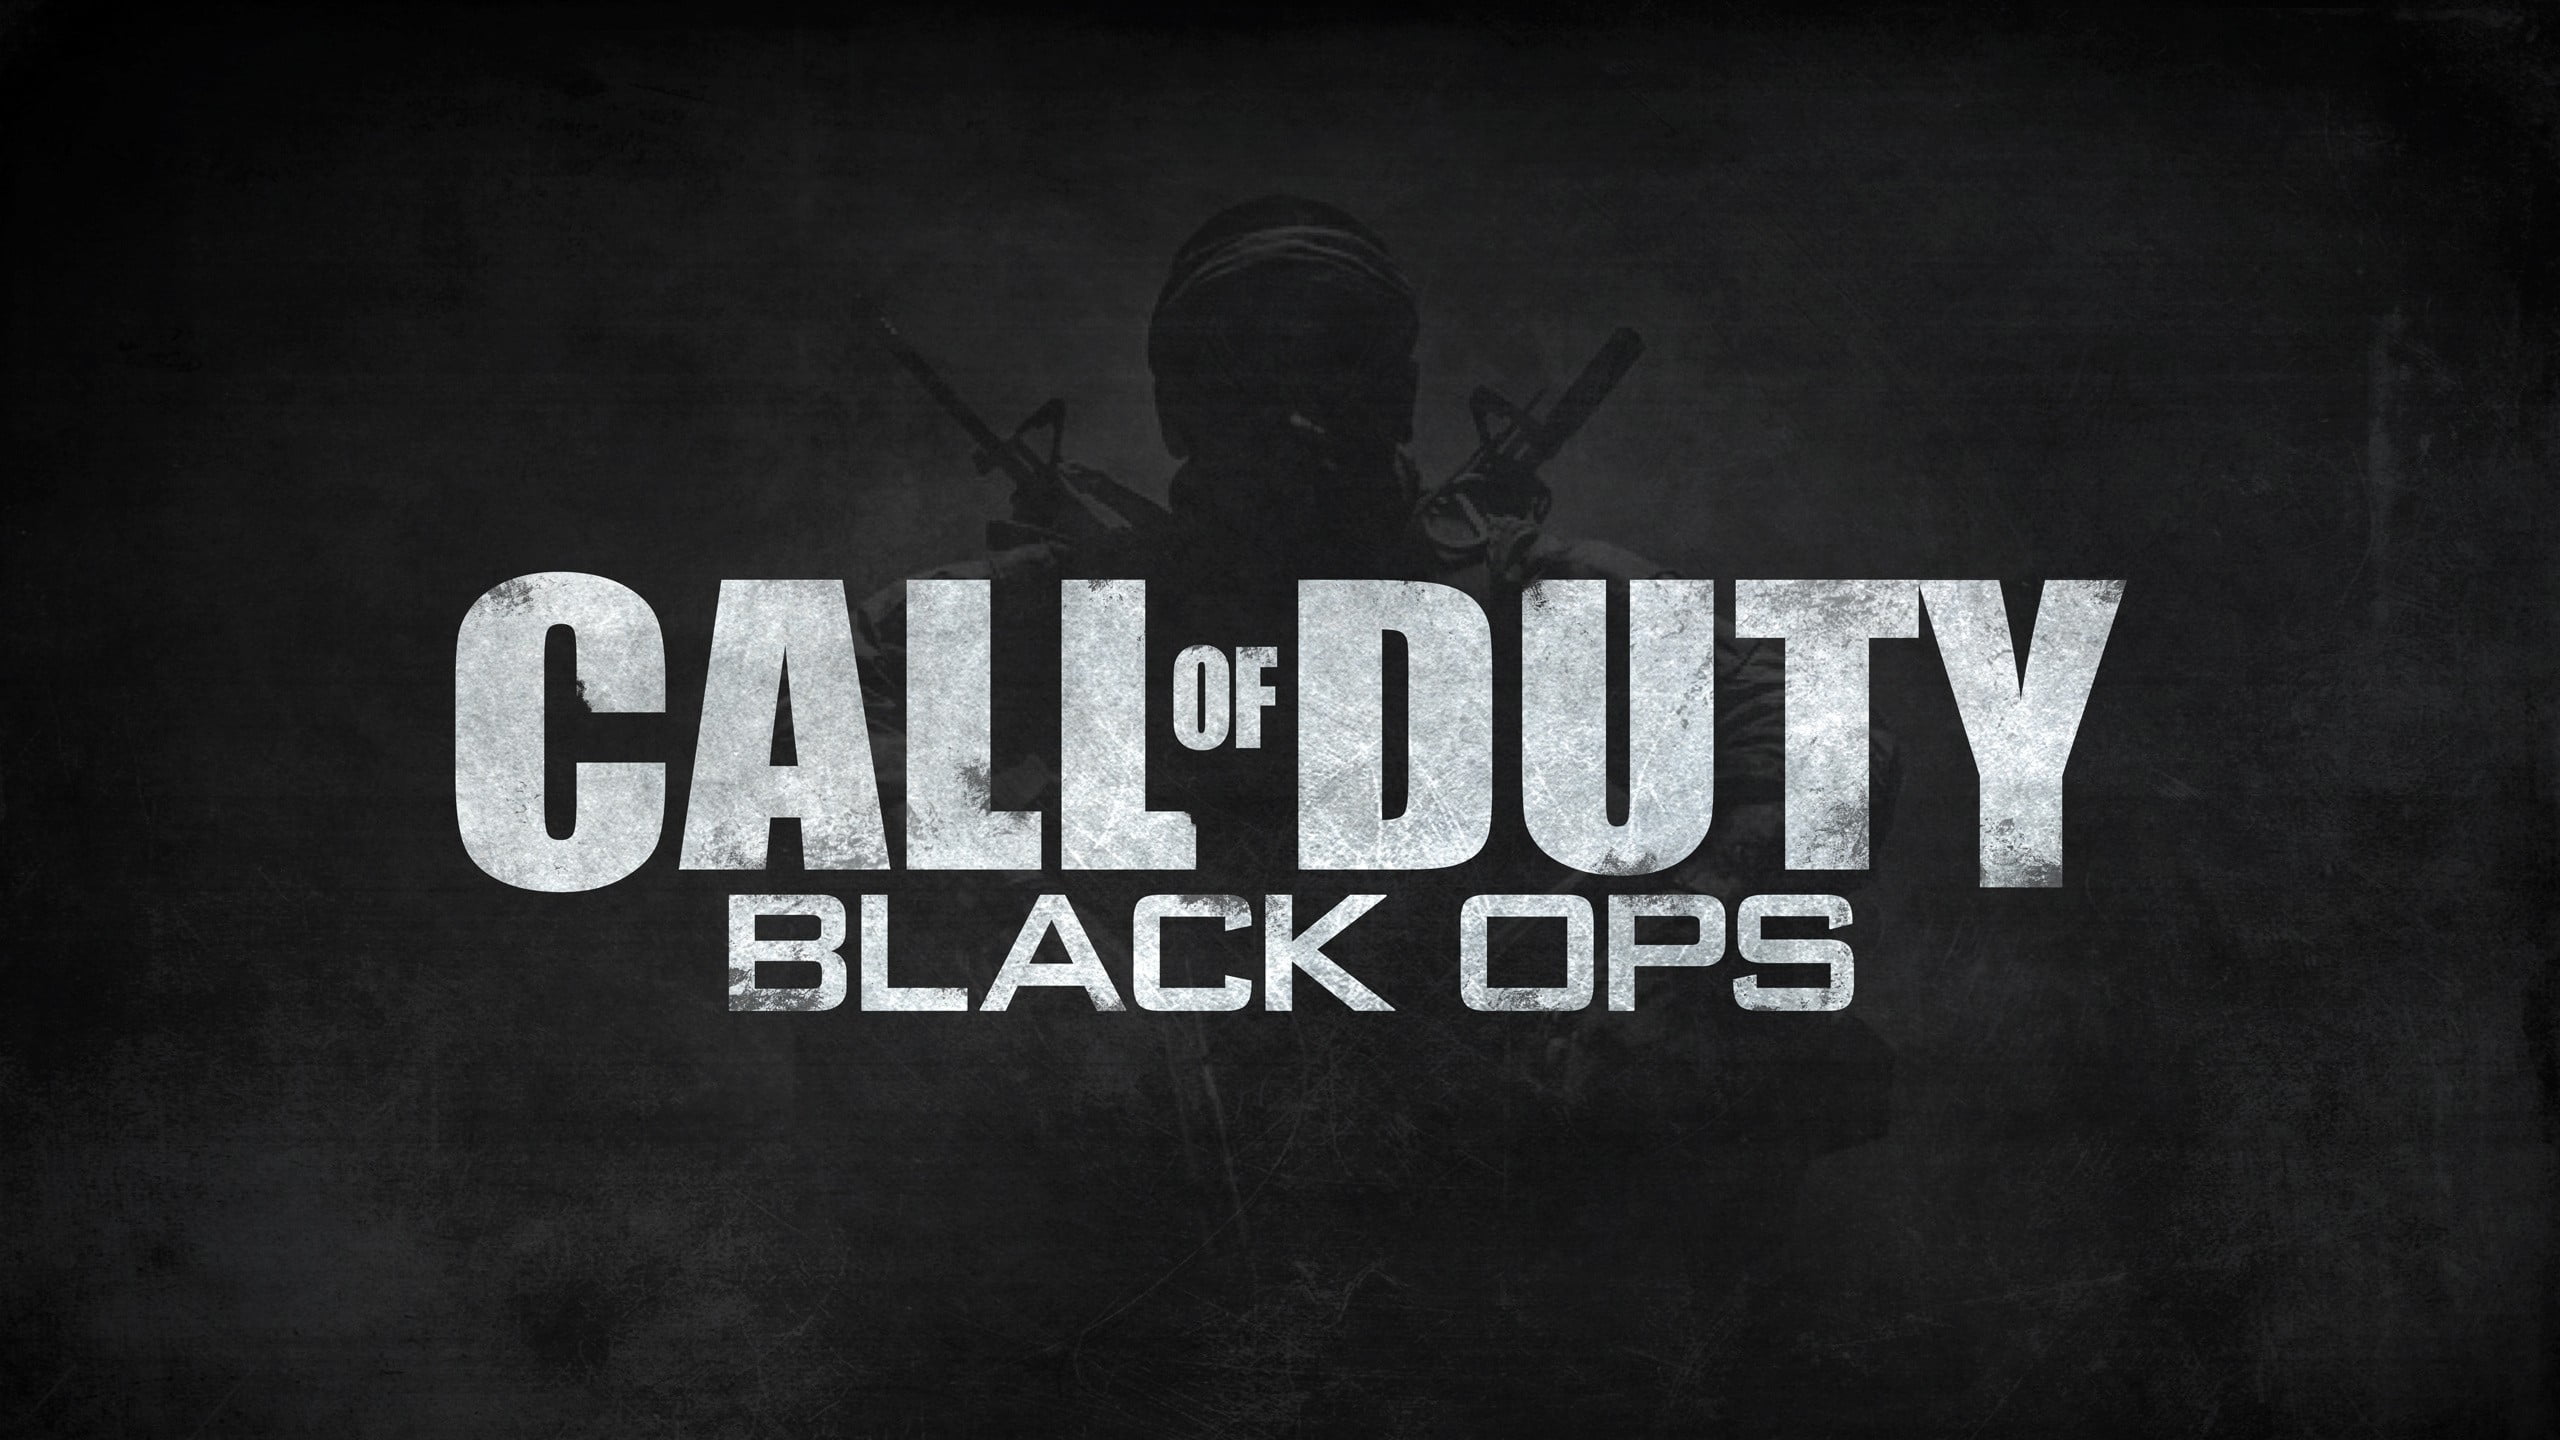 Call of Duty Black Ops digital wallpaper, Call of Duty: Black Ops, Call of Duty, minimalism, video games